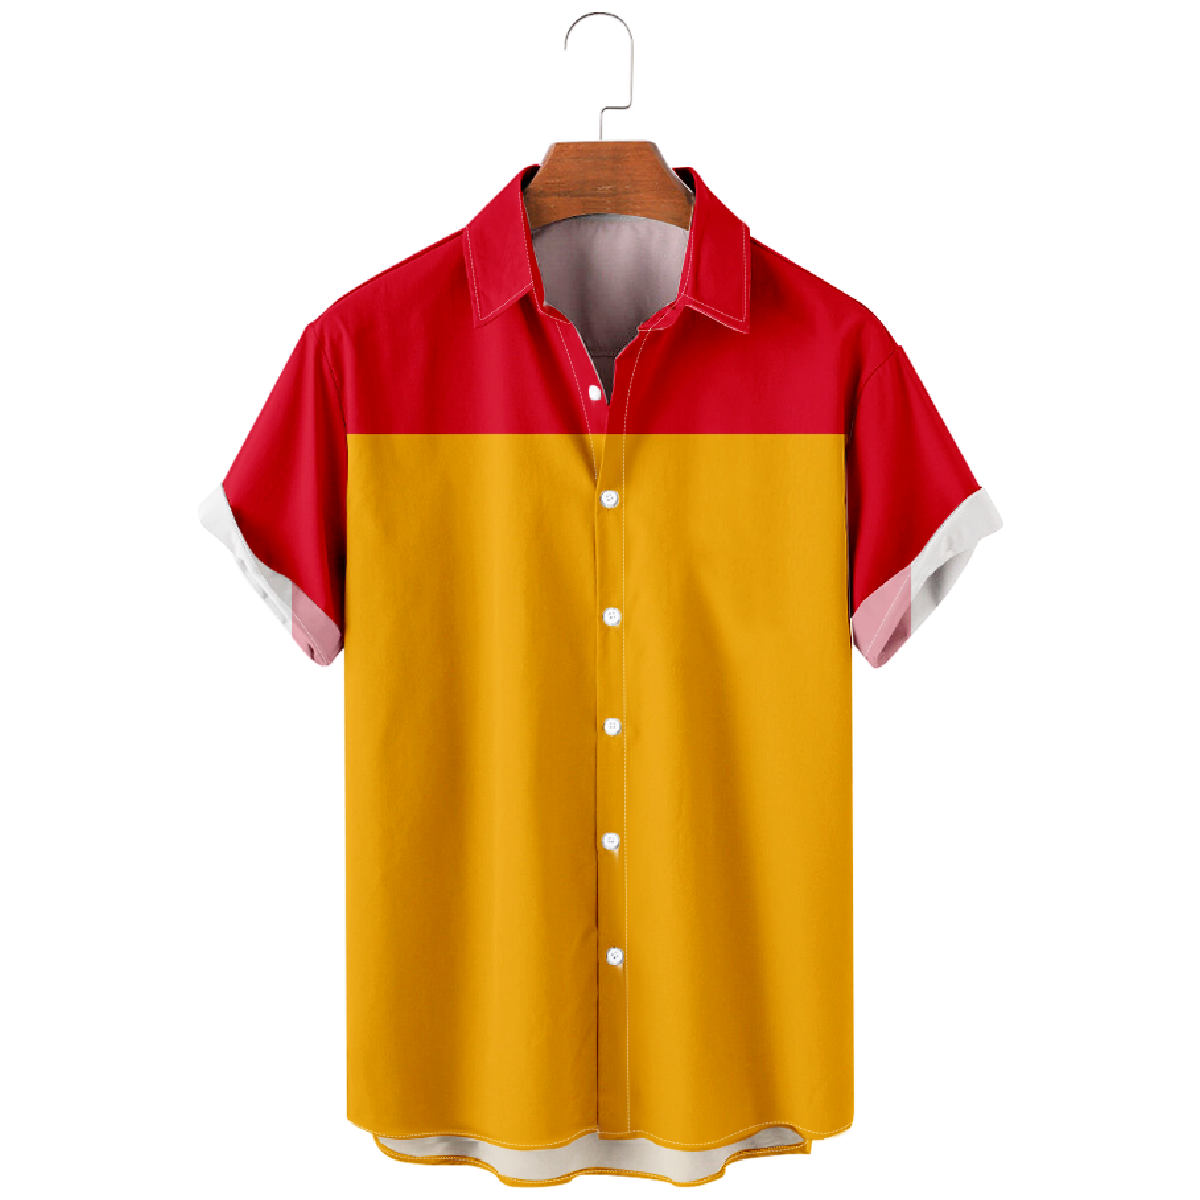 Mens American Football Kansas City Red and Gold Button Up Shirt Short Sleeve Regular Fit Breathable Shirt